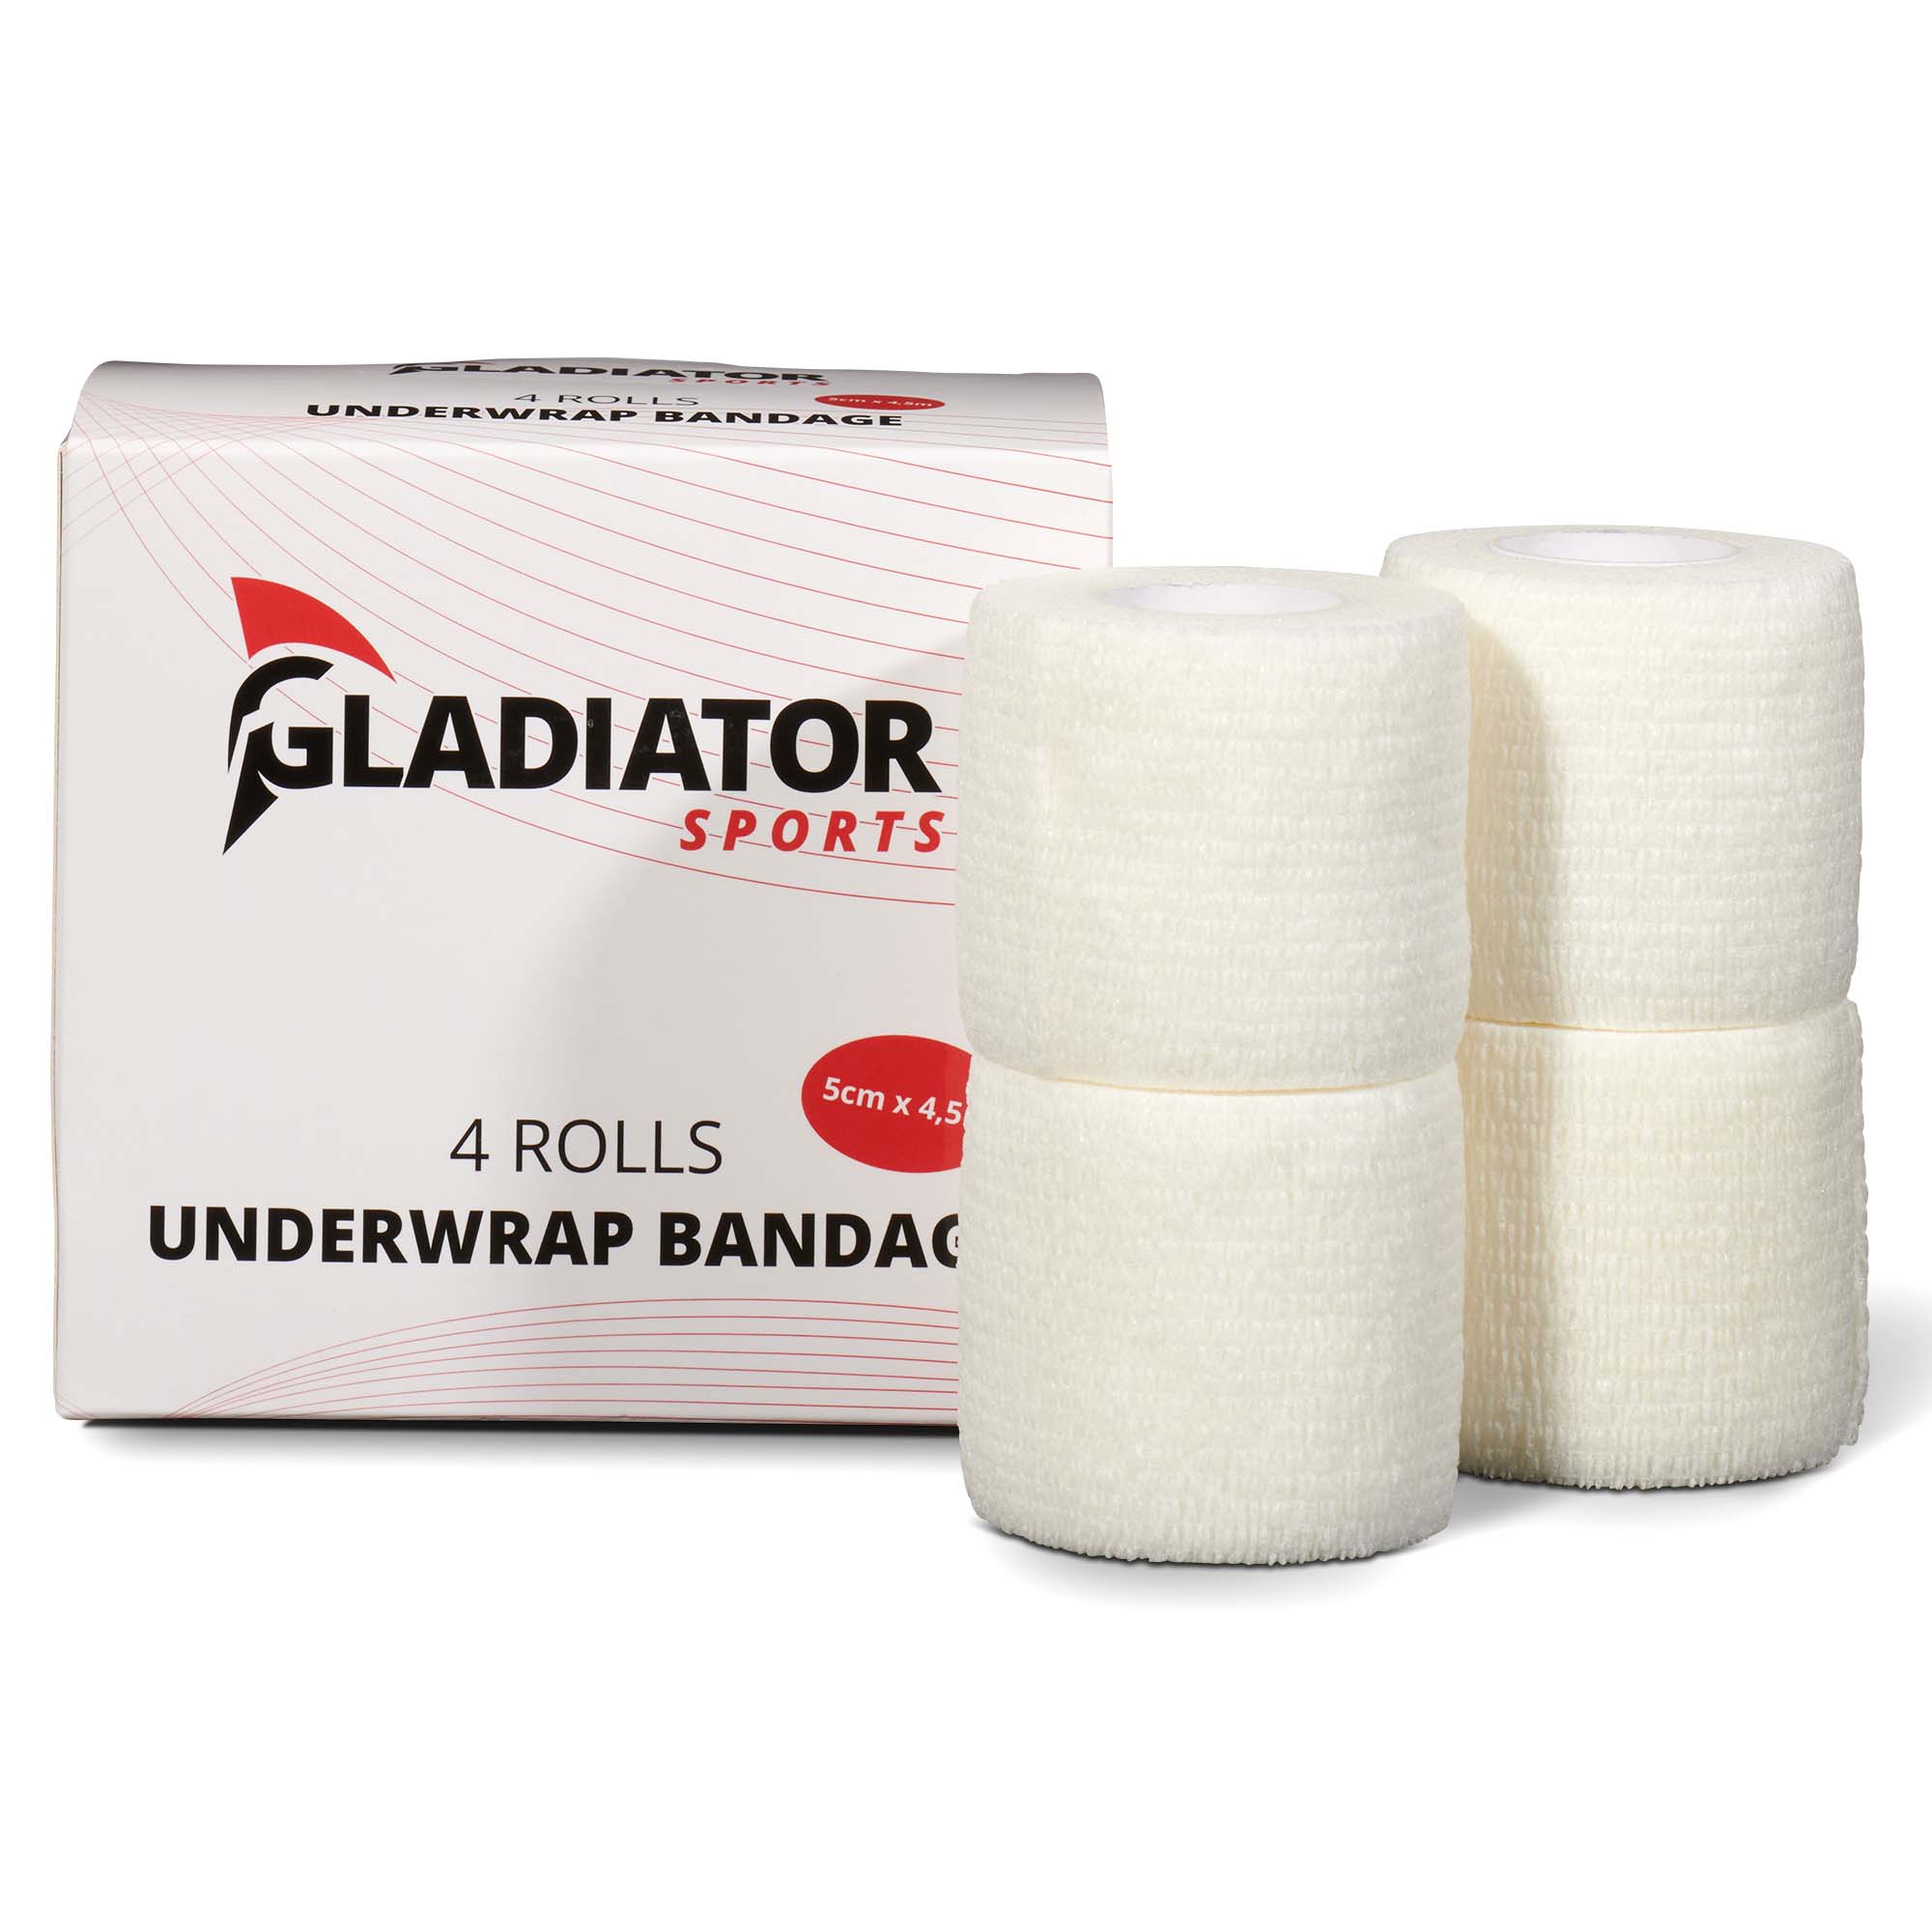 Gladiator Sports underwrap bandage per 4 rolls white with box